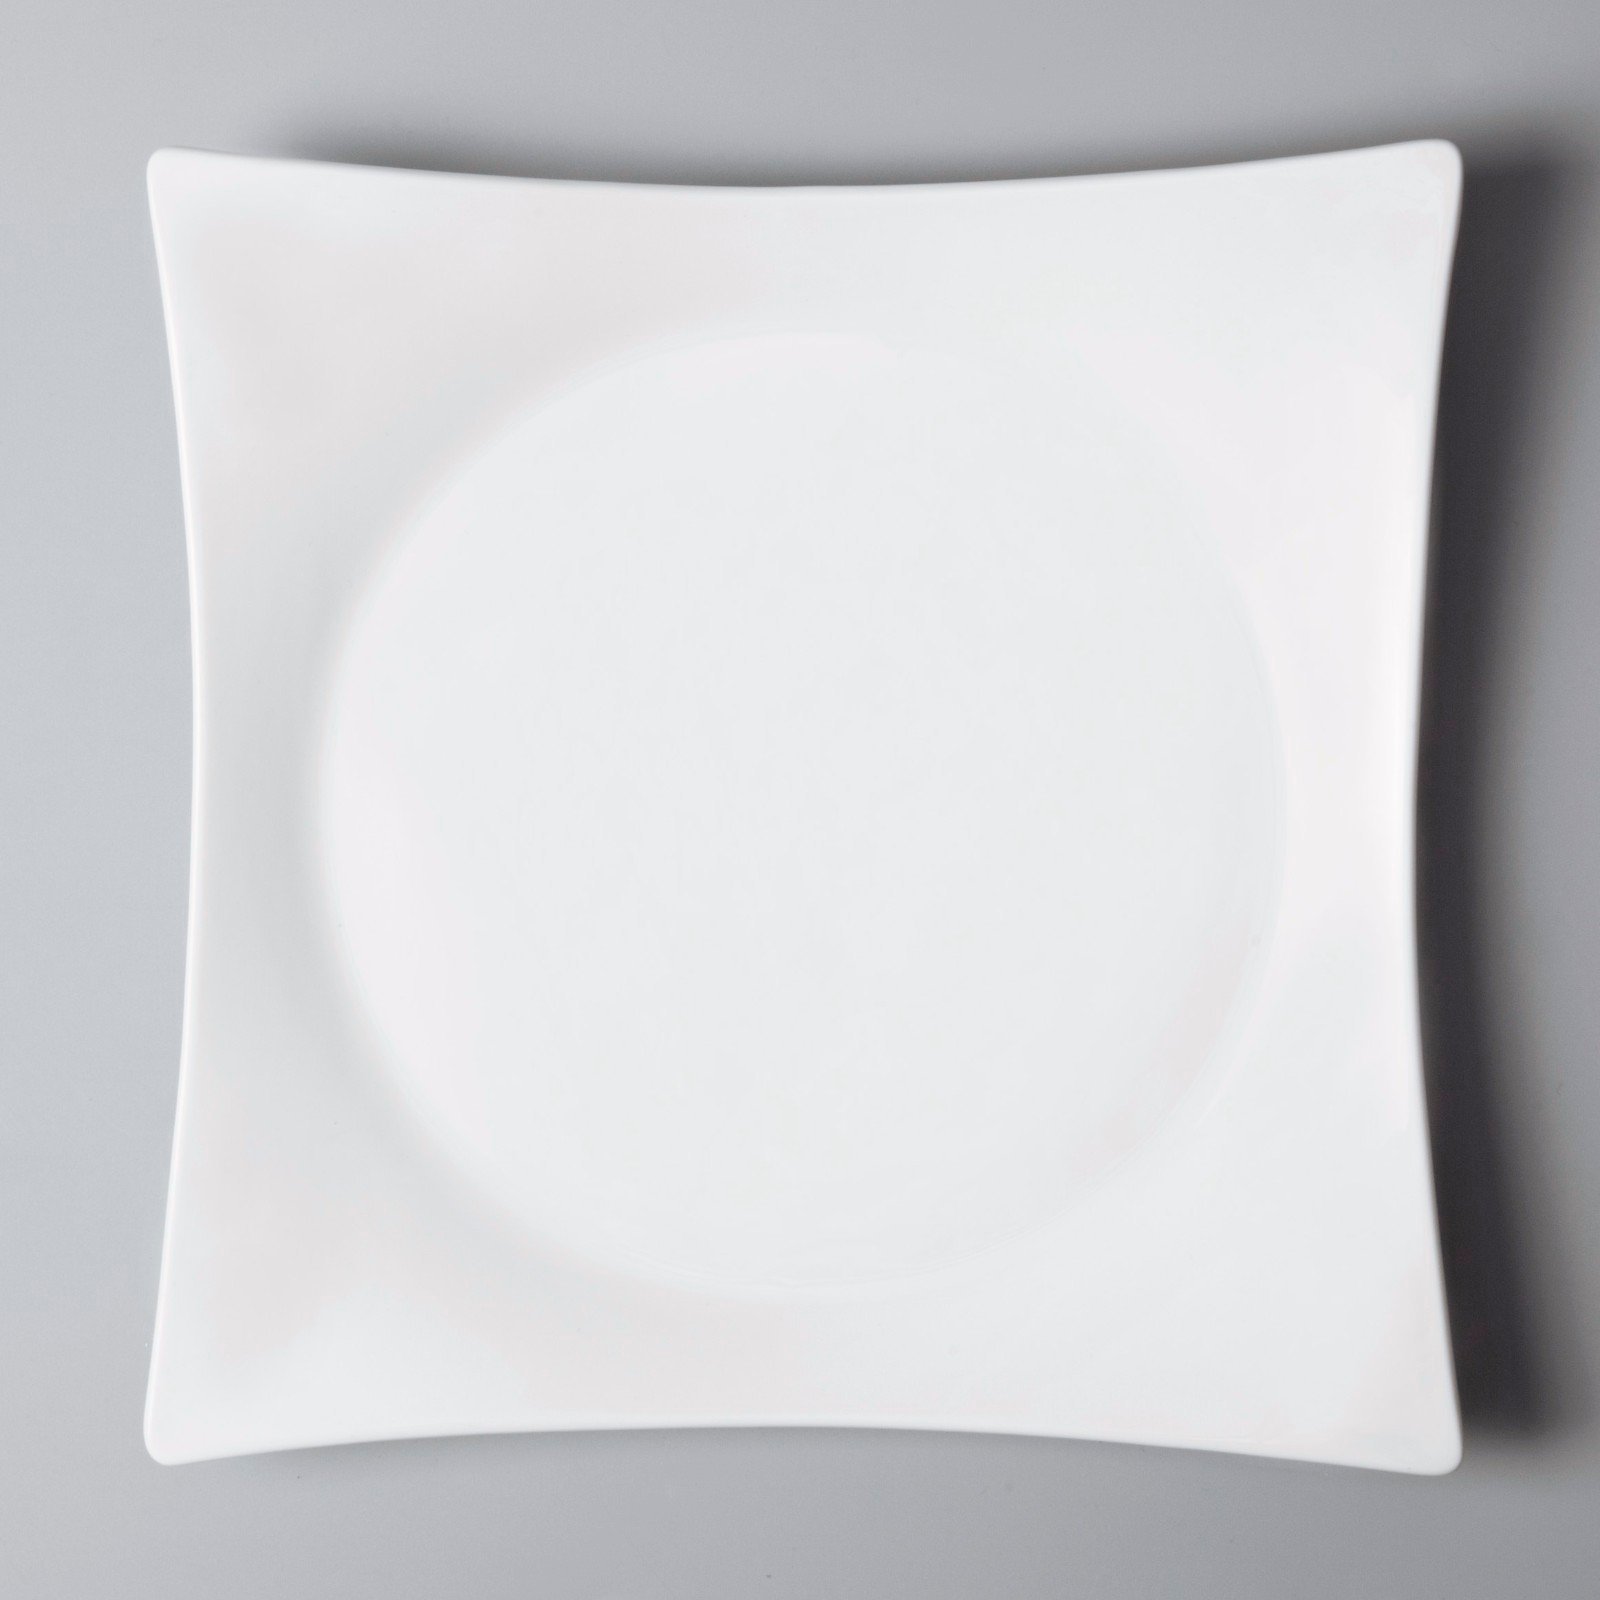 Two Eight Brand white italian white porcelain tableware irregular